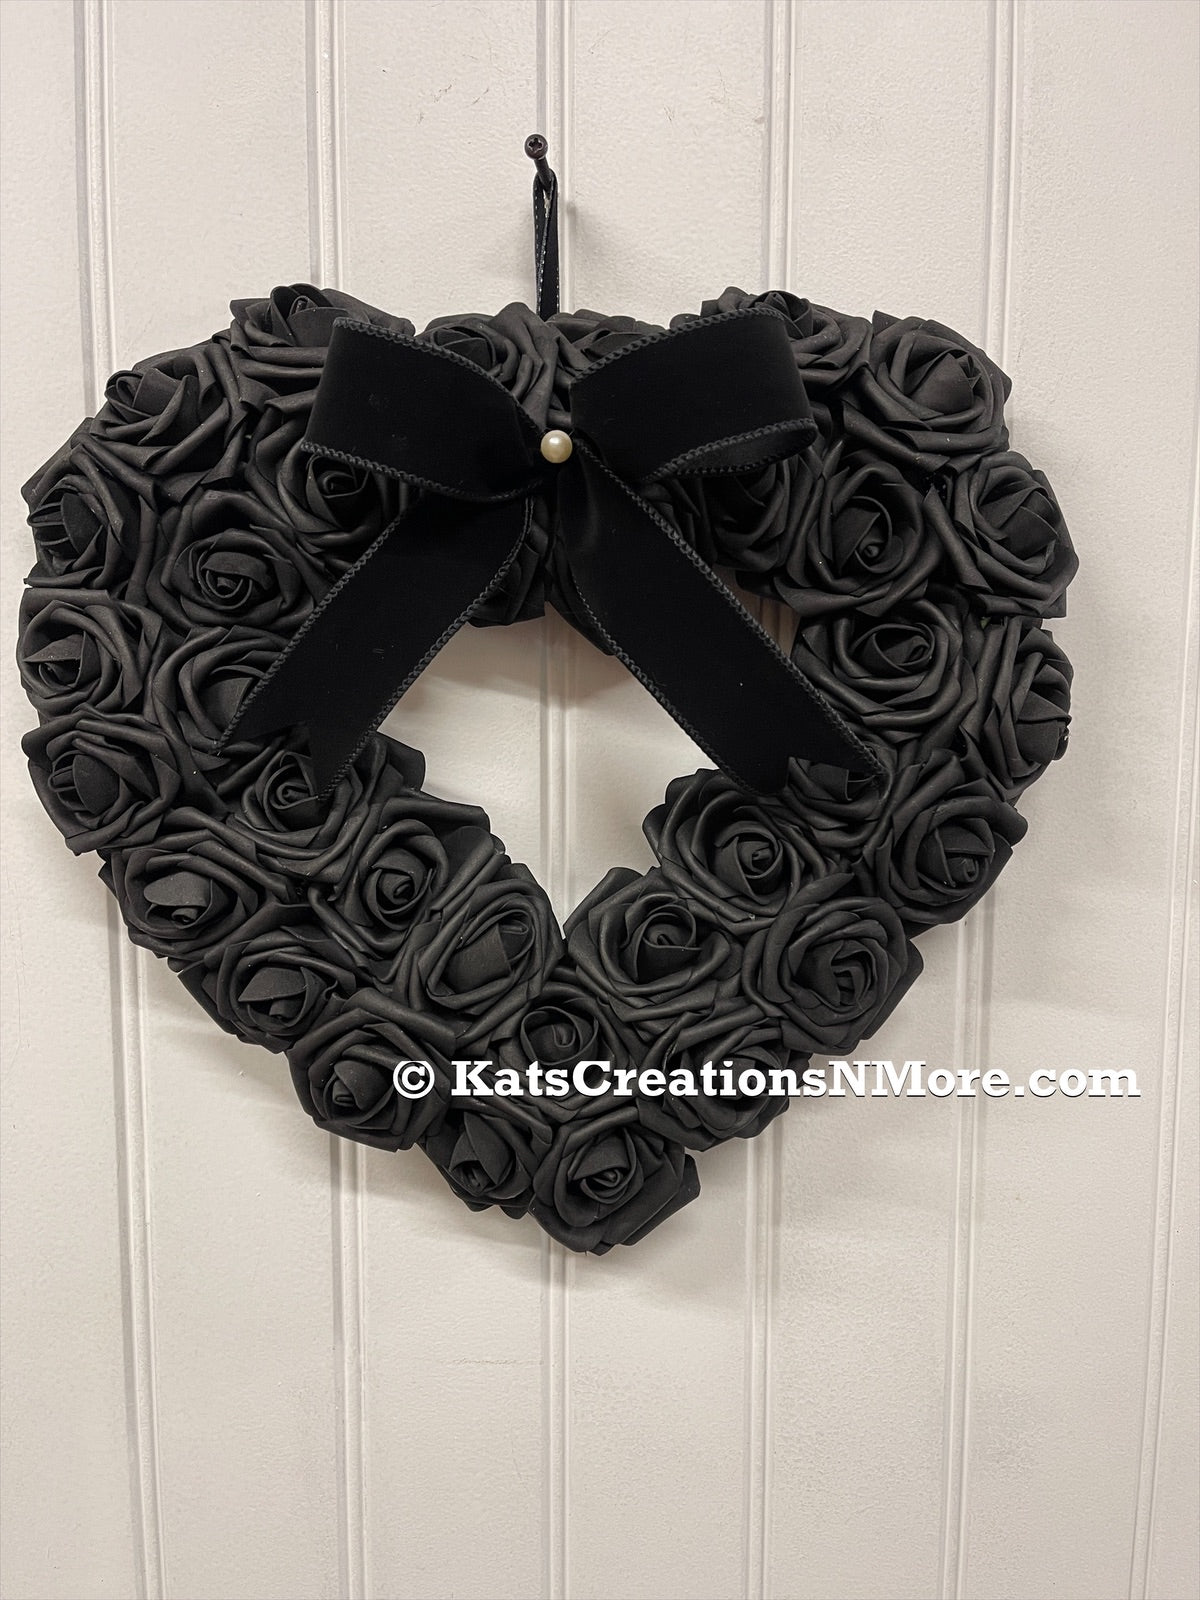 Heart Shaped Black Rose Halloween Floral Wreath by KatsCreationsNMore